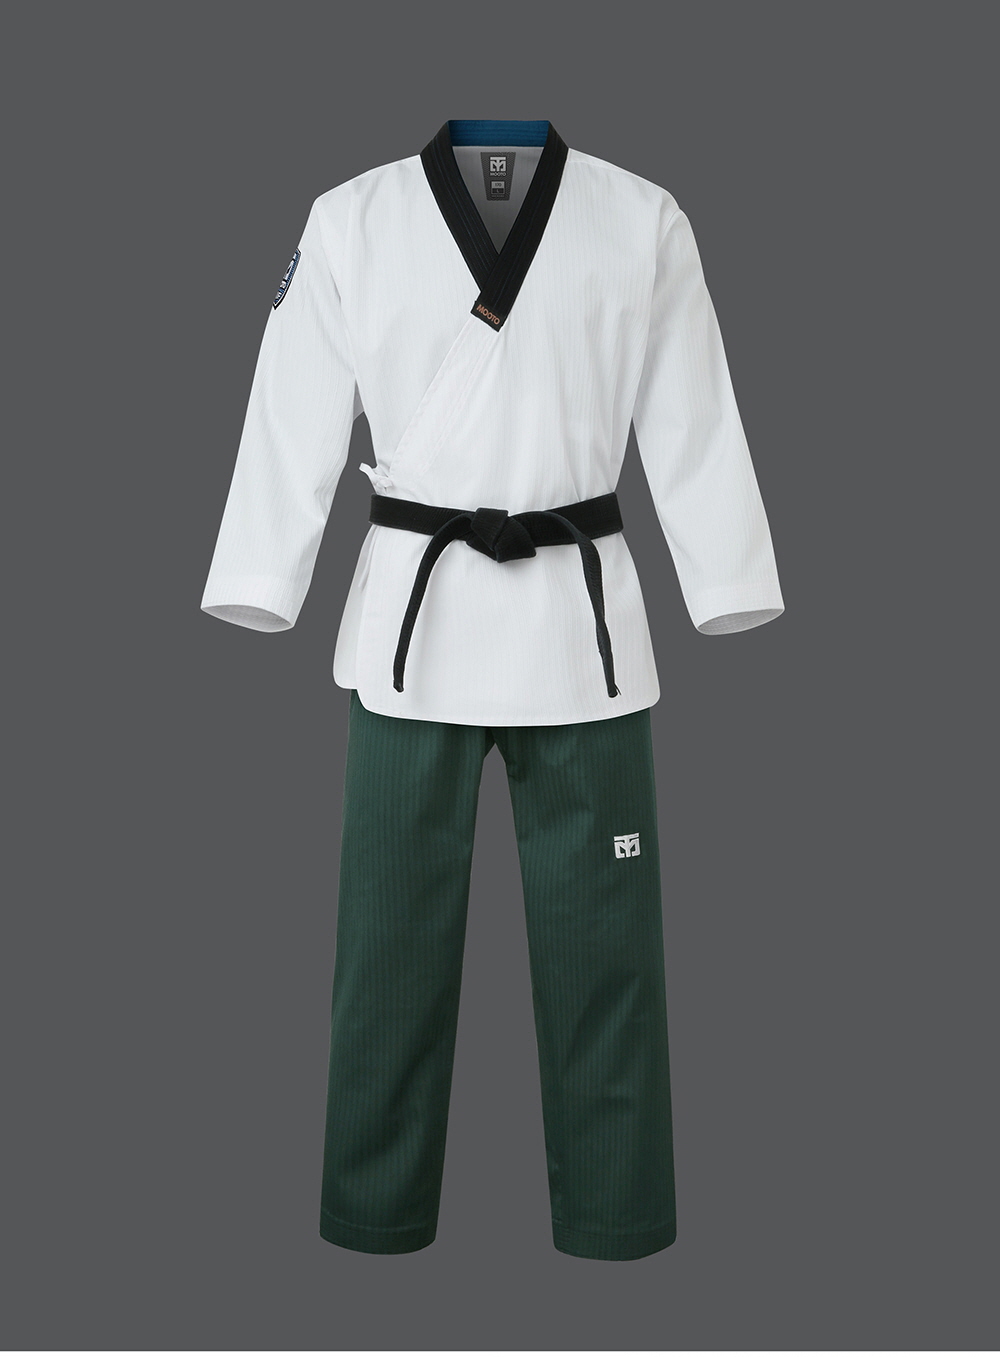 MOOTO 3F 2 Demonstration Uniform (Green)